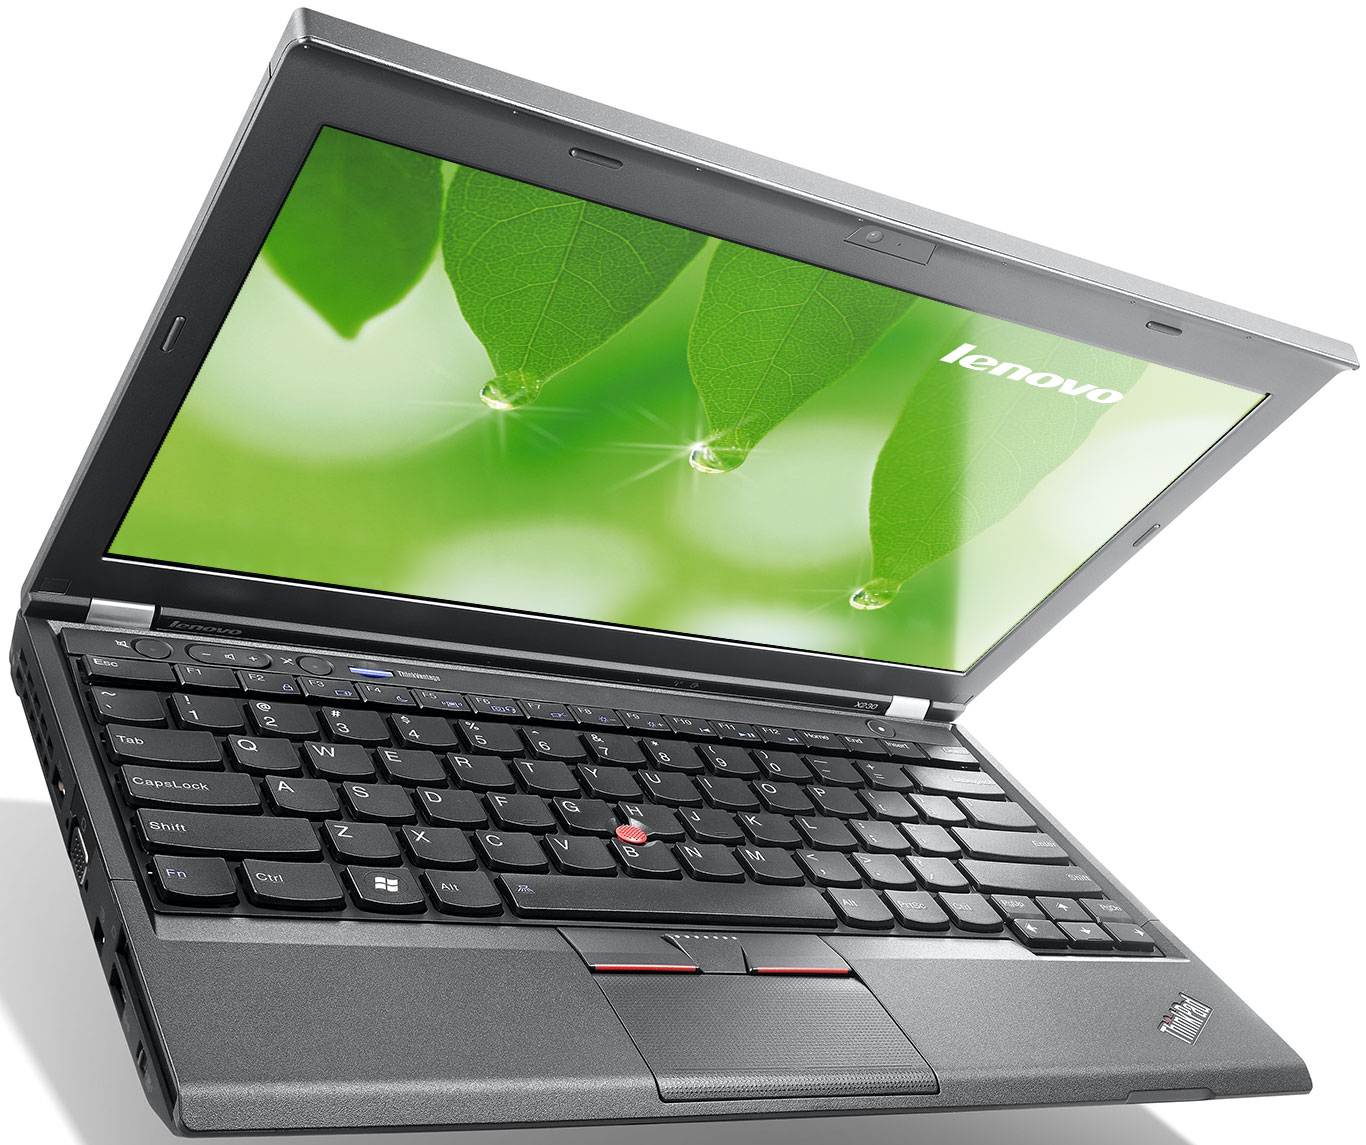   Lenovo ThinkPad X230 (NZC95RT)  2